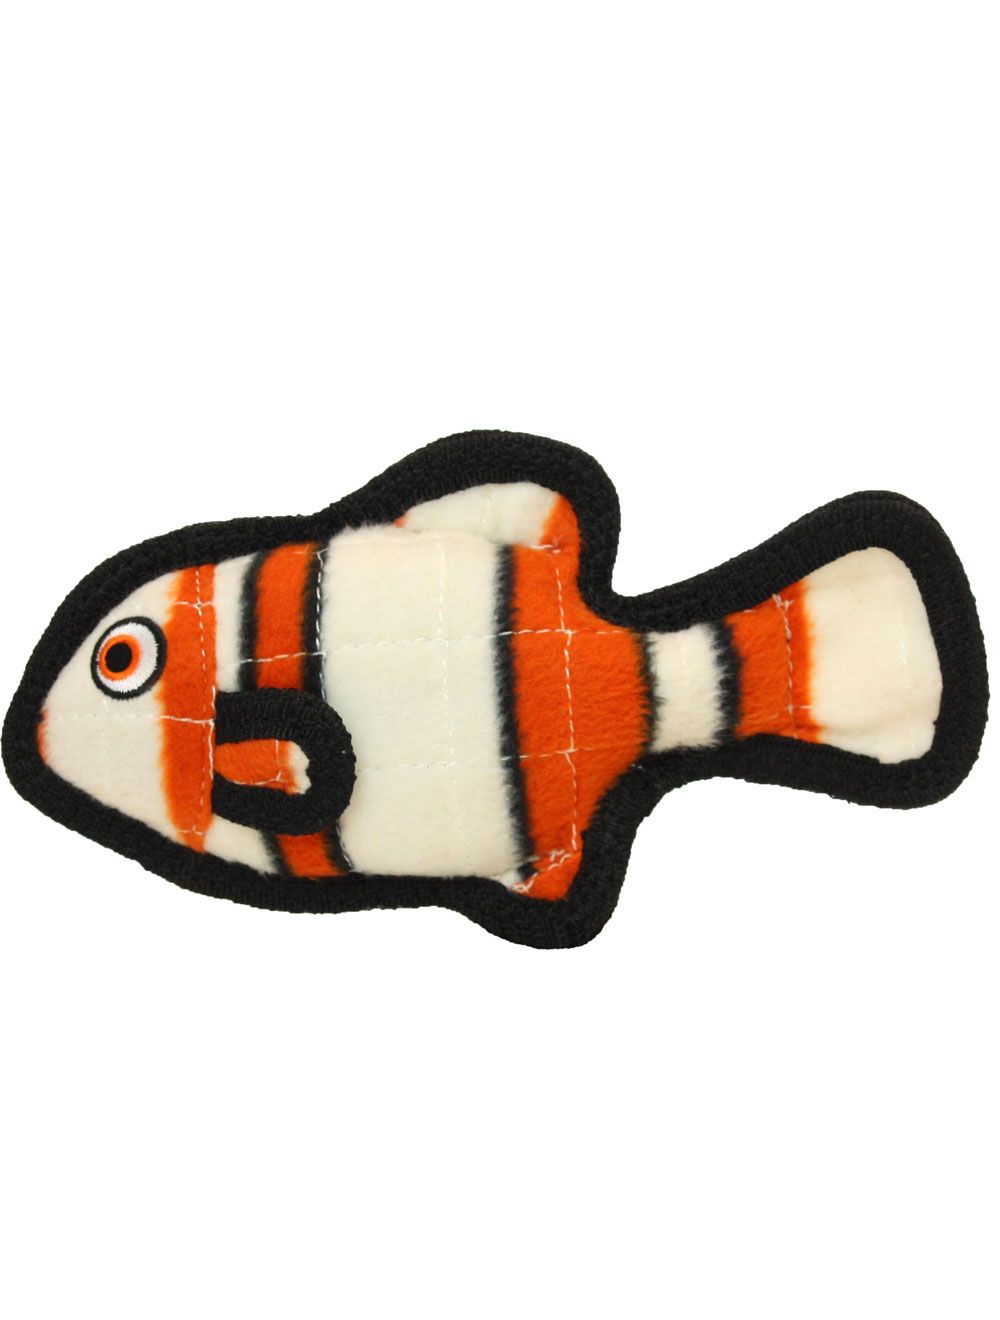 Tuffy Fish Red Junior Toy